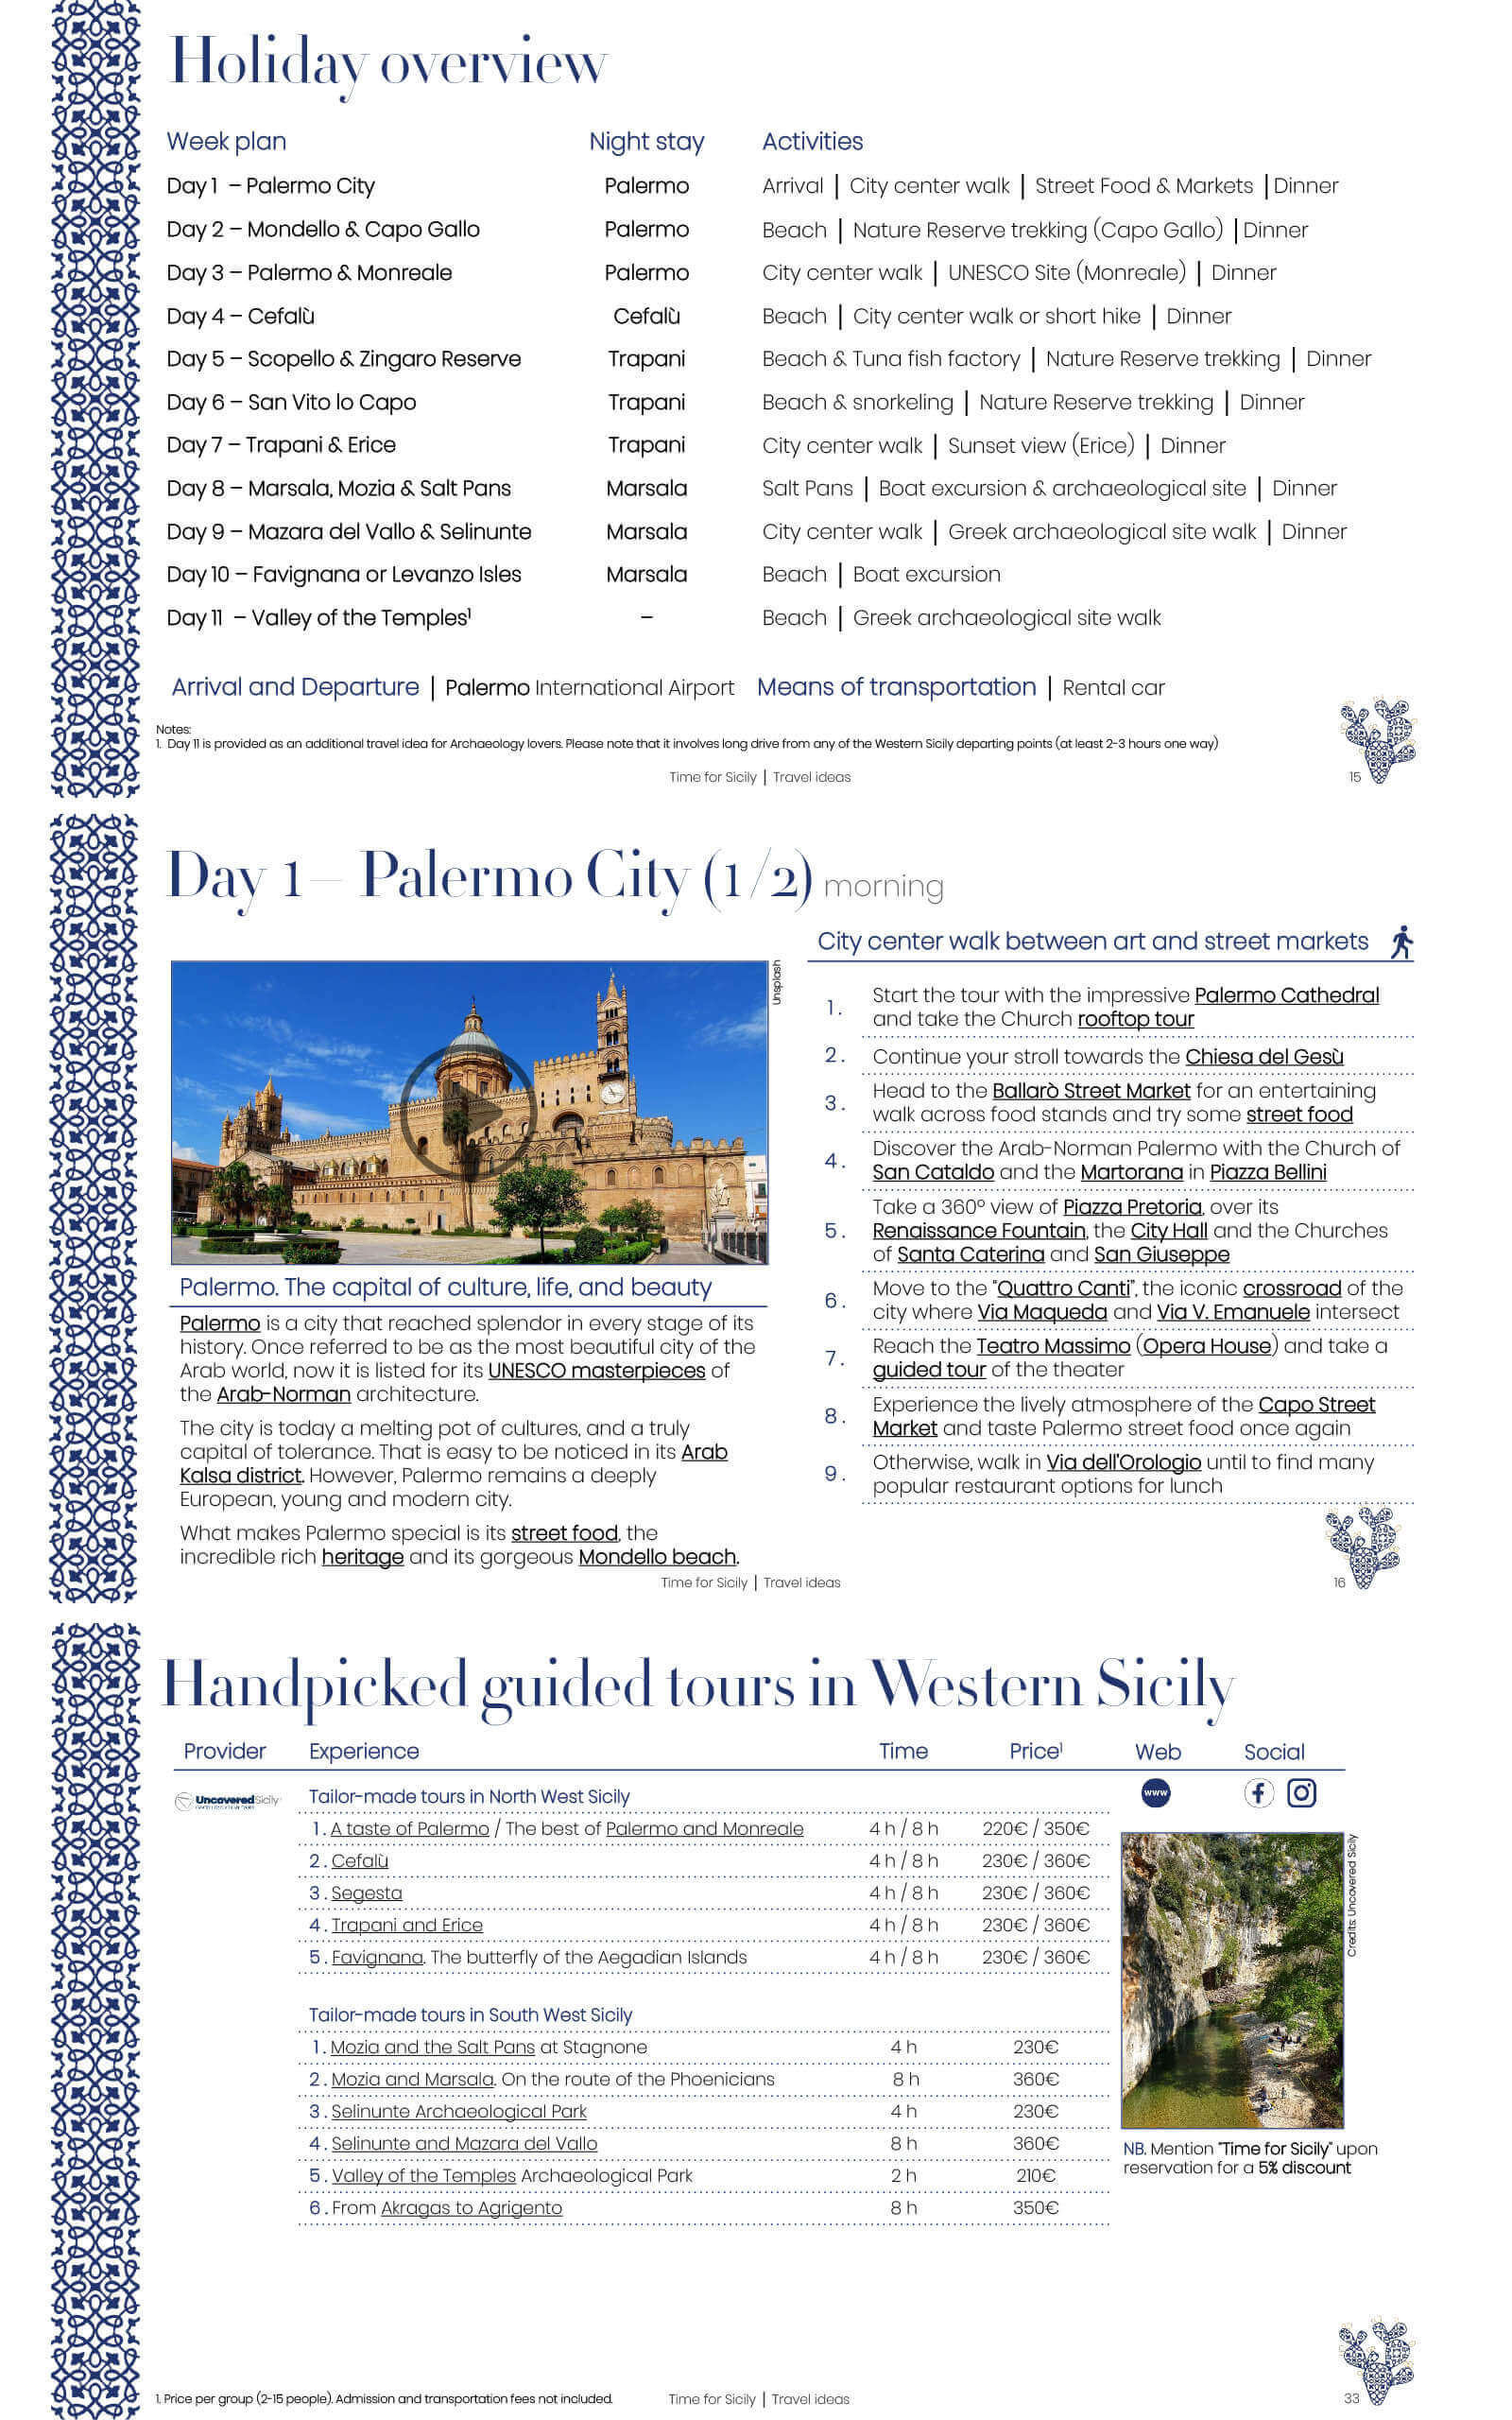 Nine days in Western Sicily Digital Travel Guide book